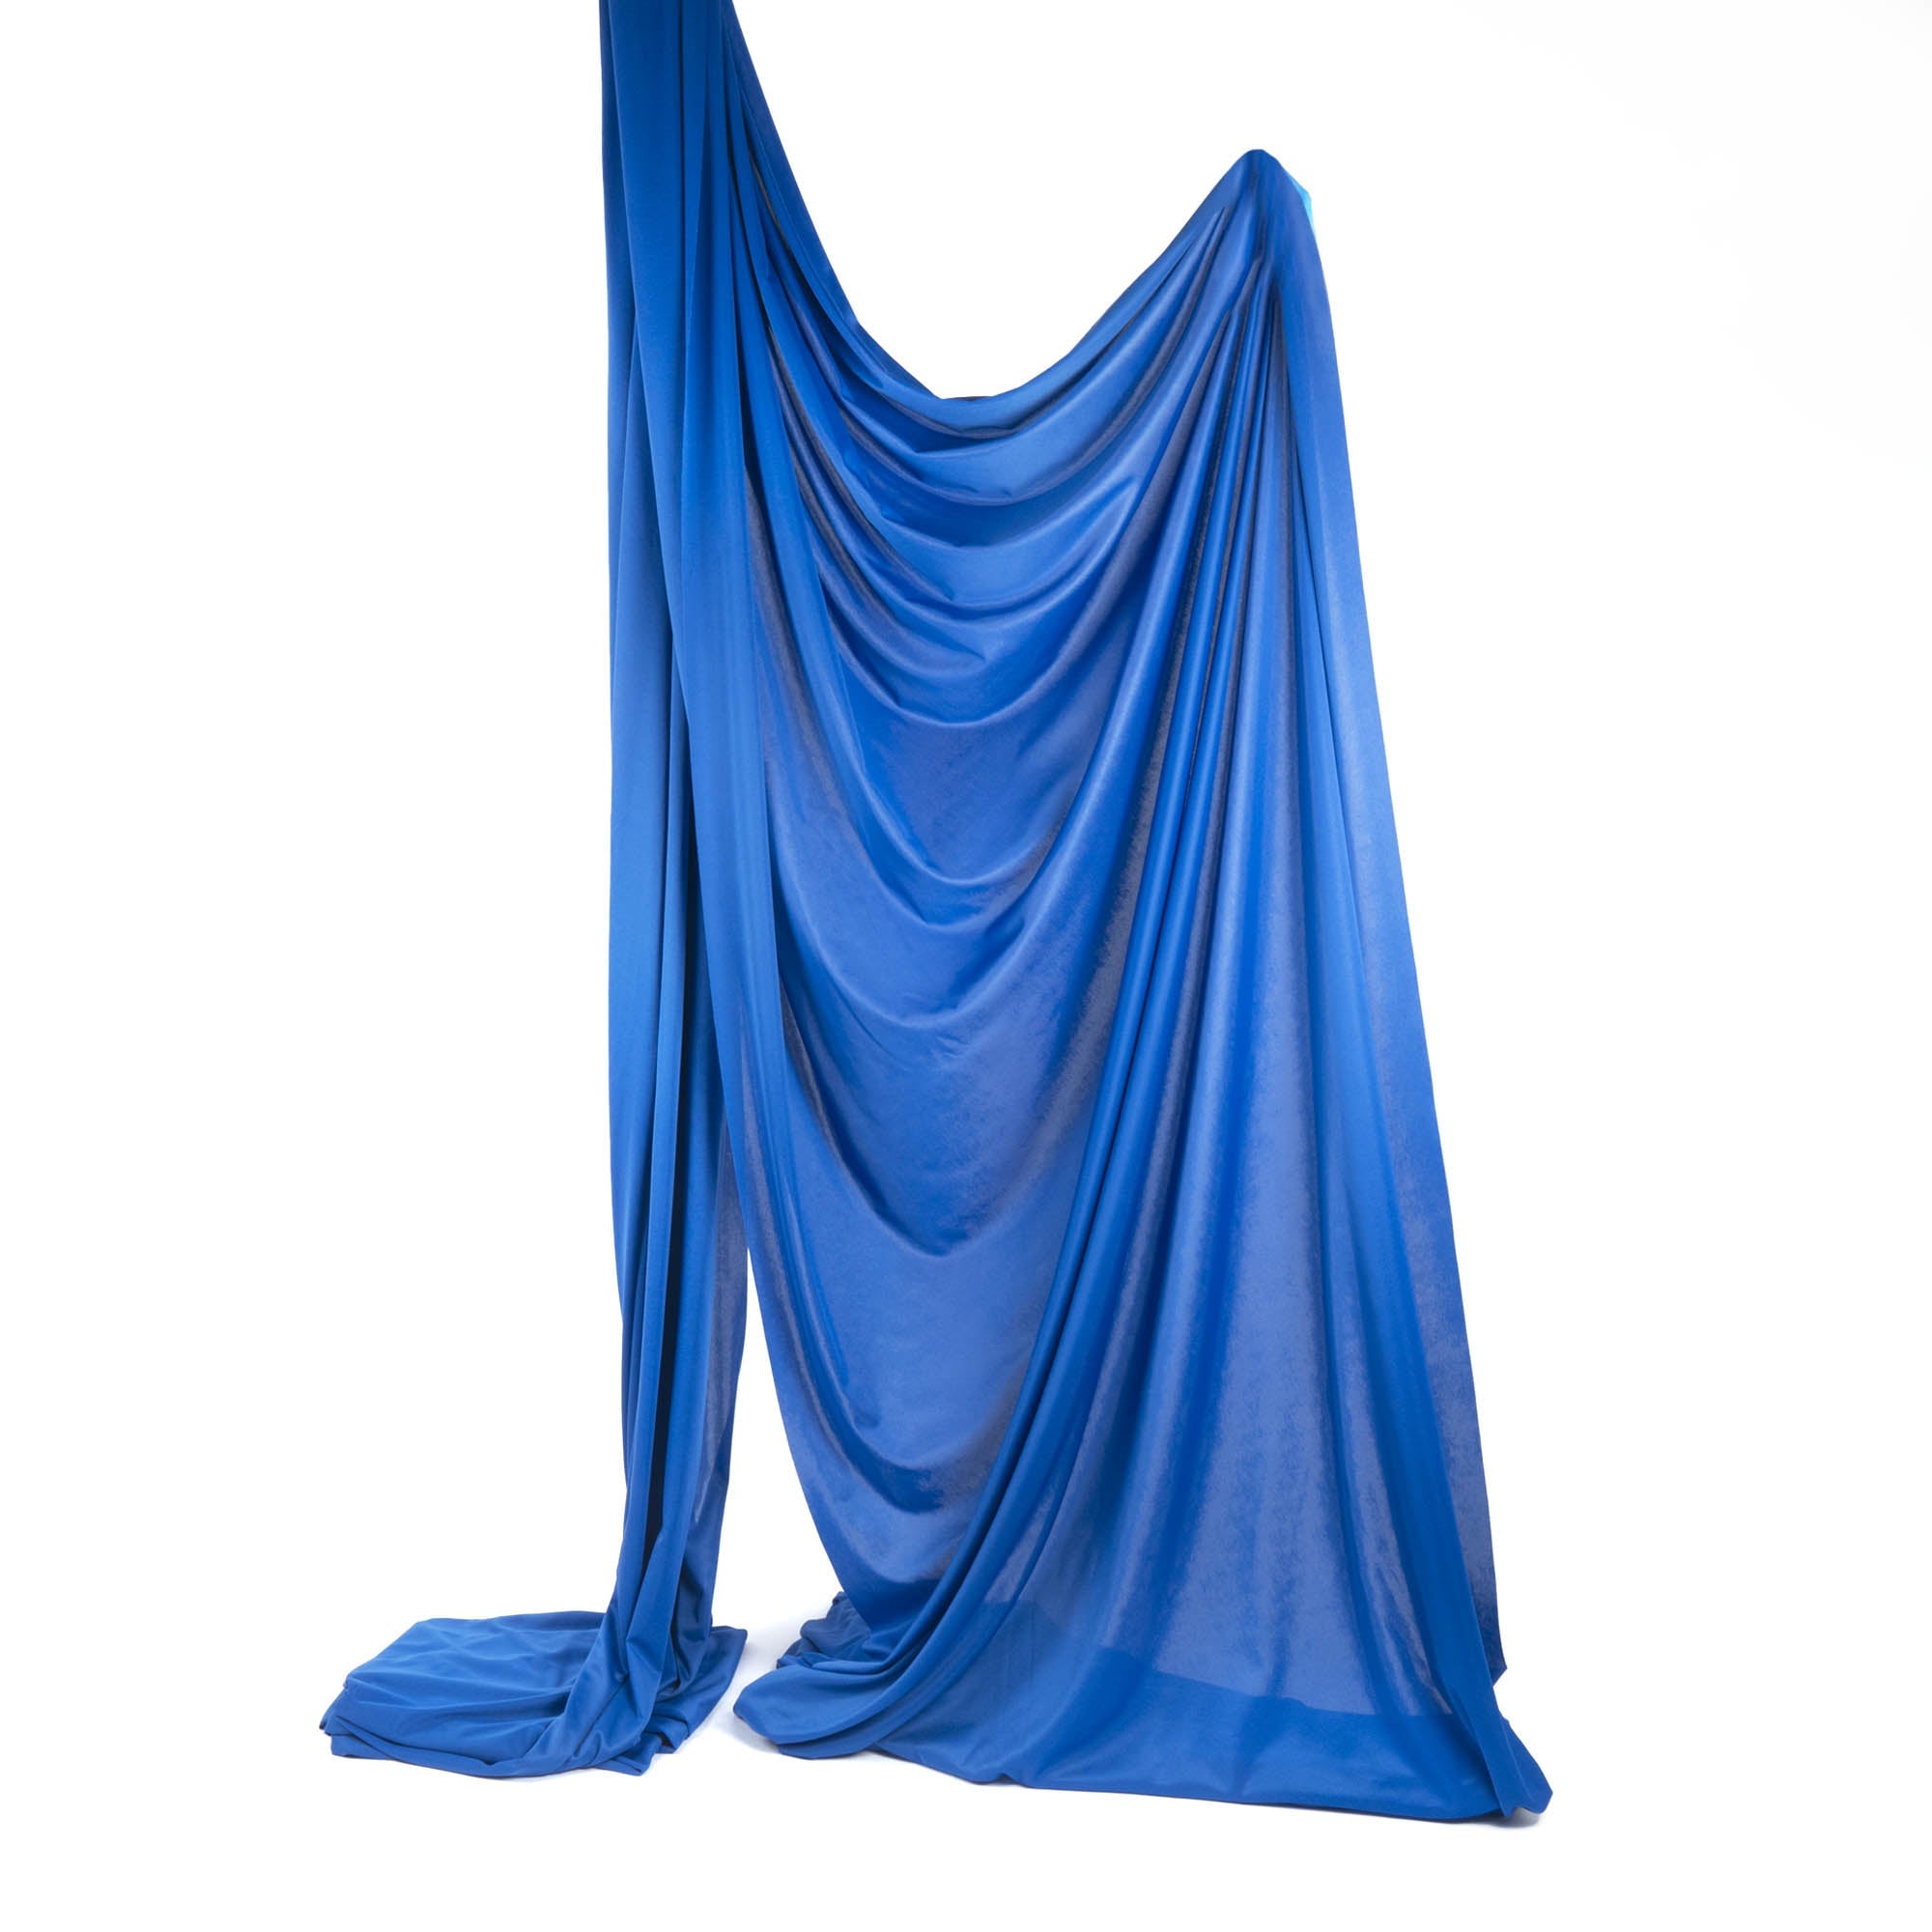 Blue silk rigged